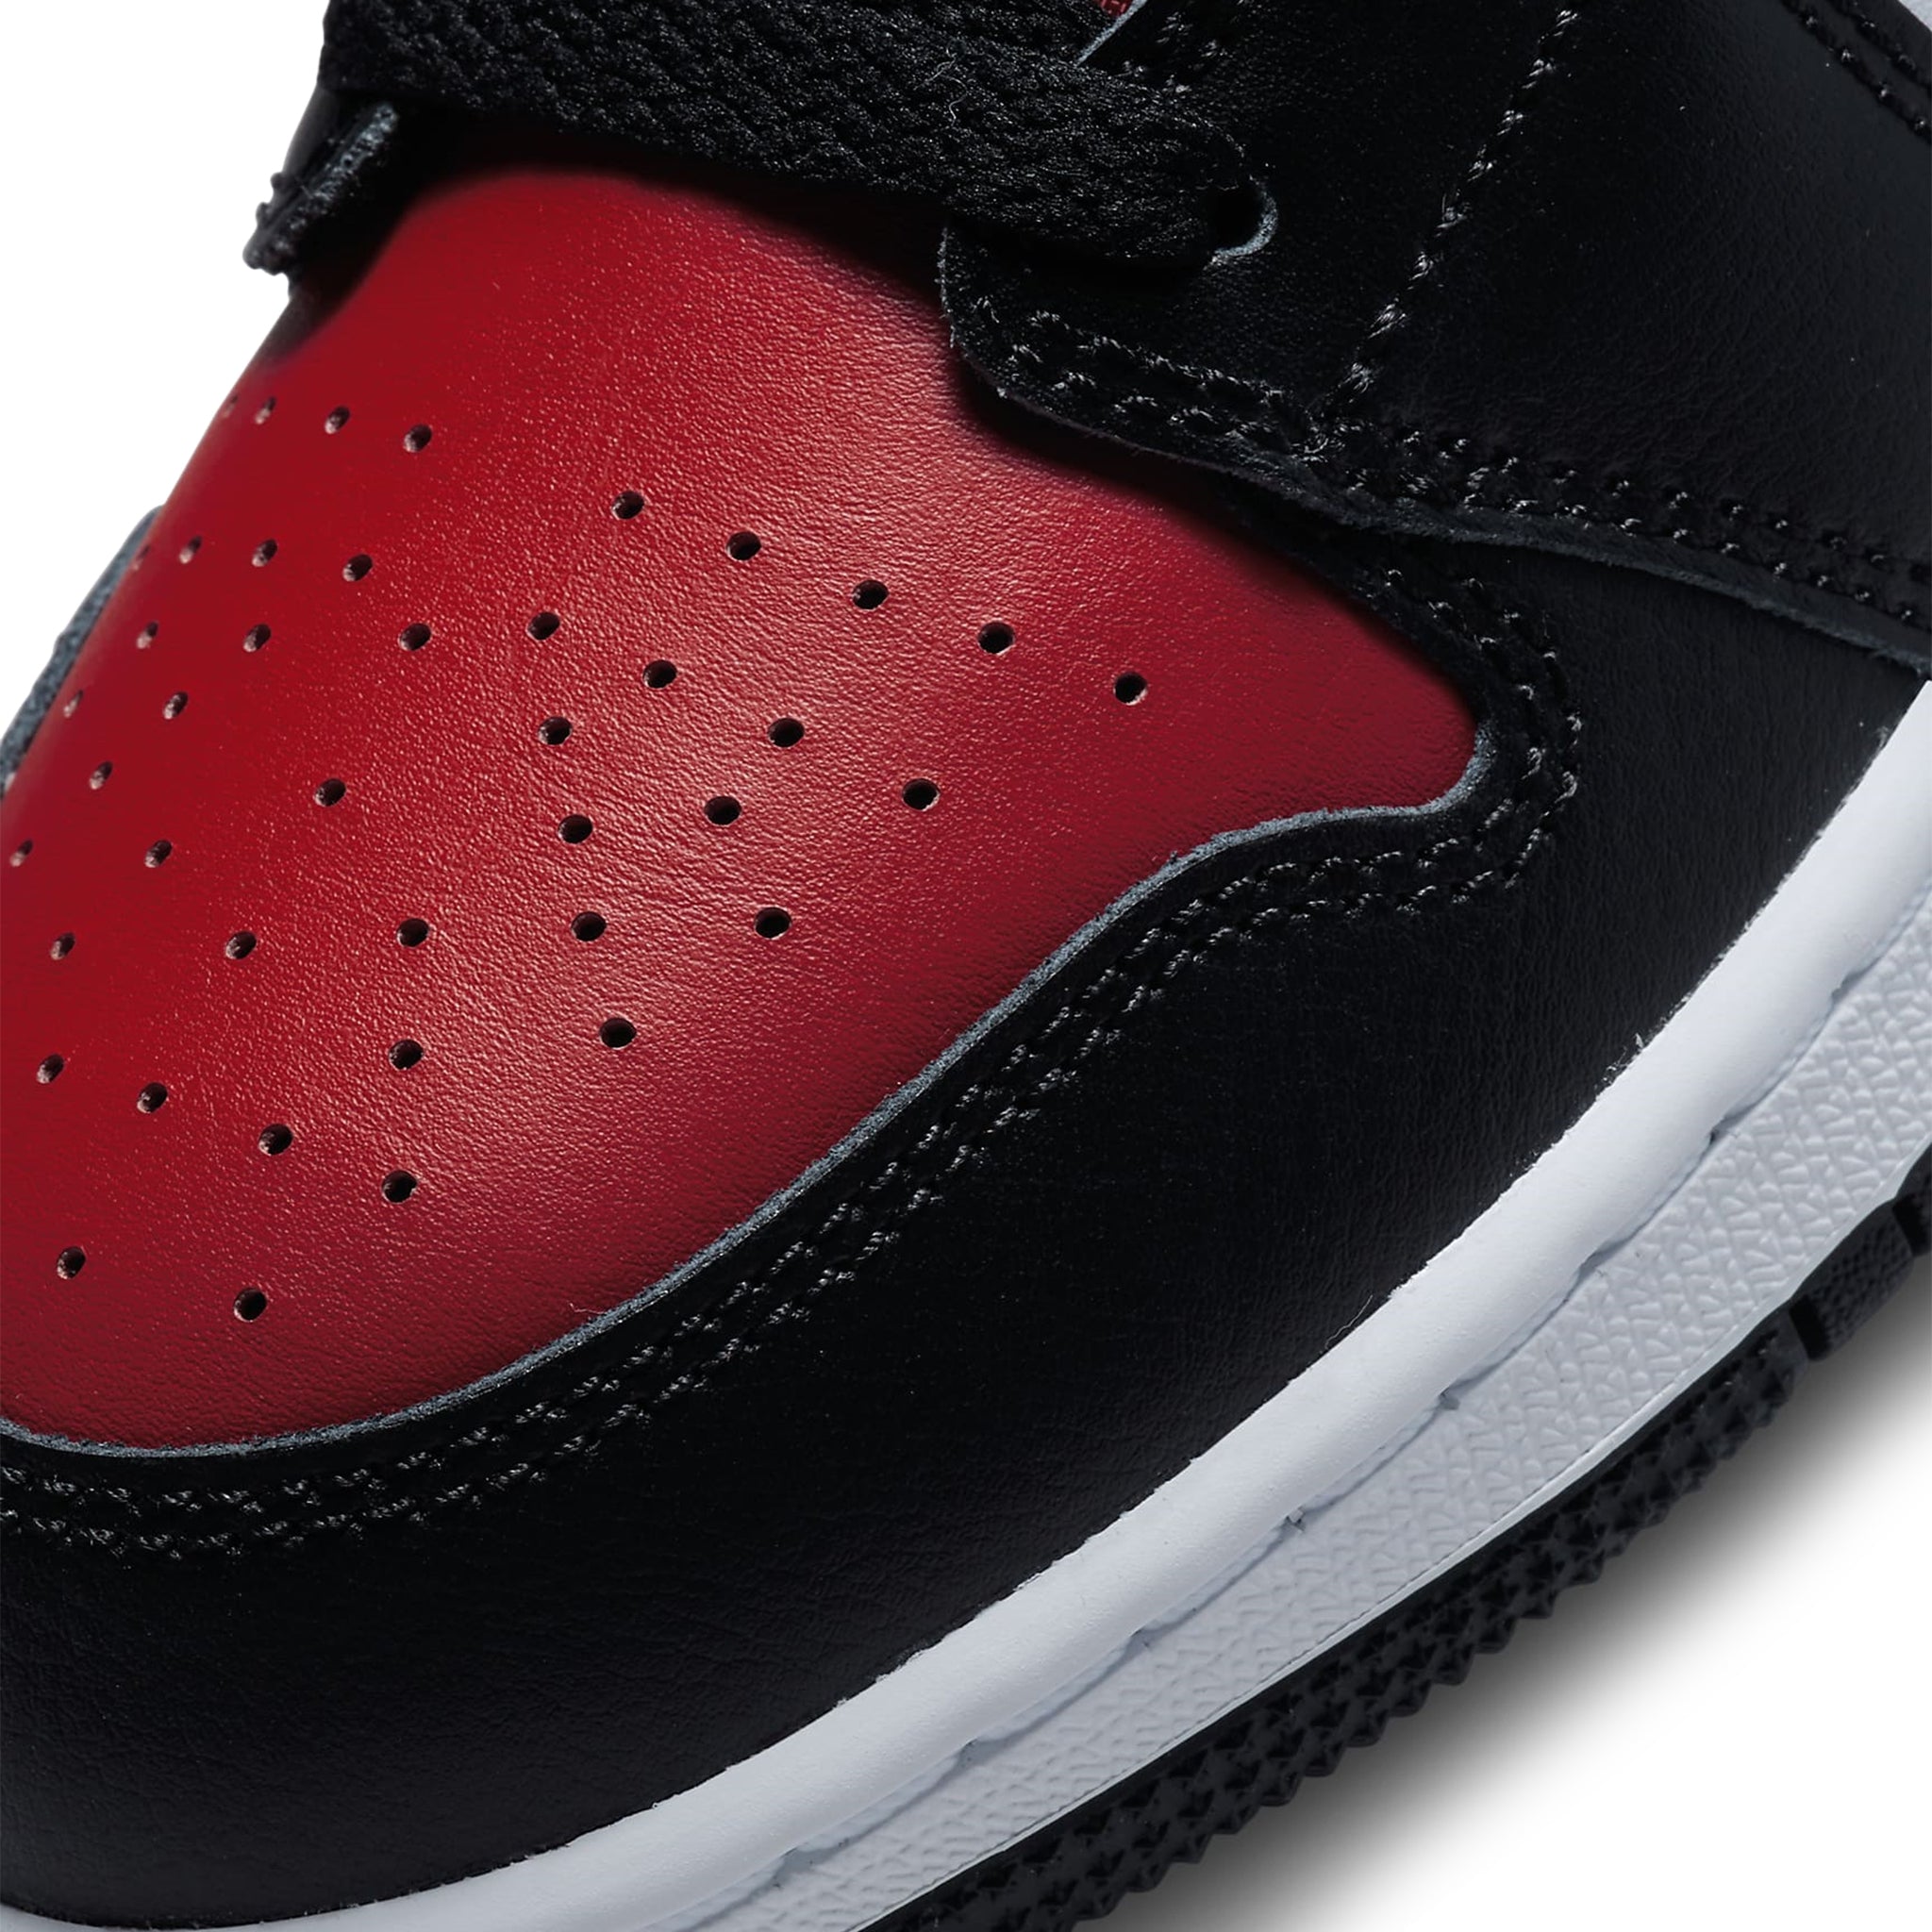 Toe box view of Air Jordan 1 Mid Black Fire Red (GS) 554725-079